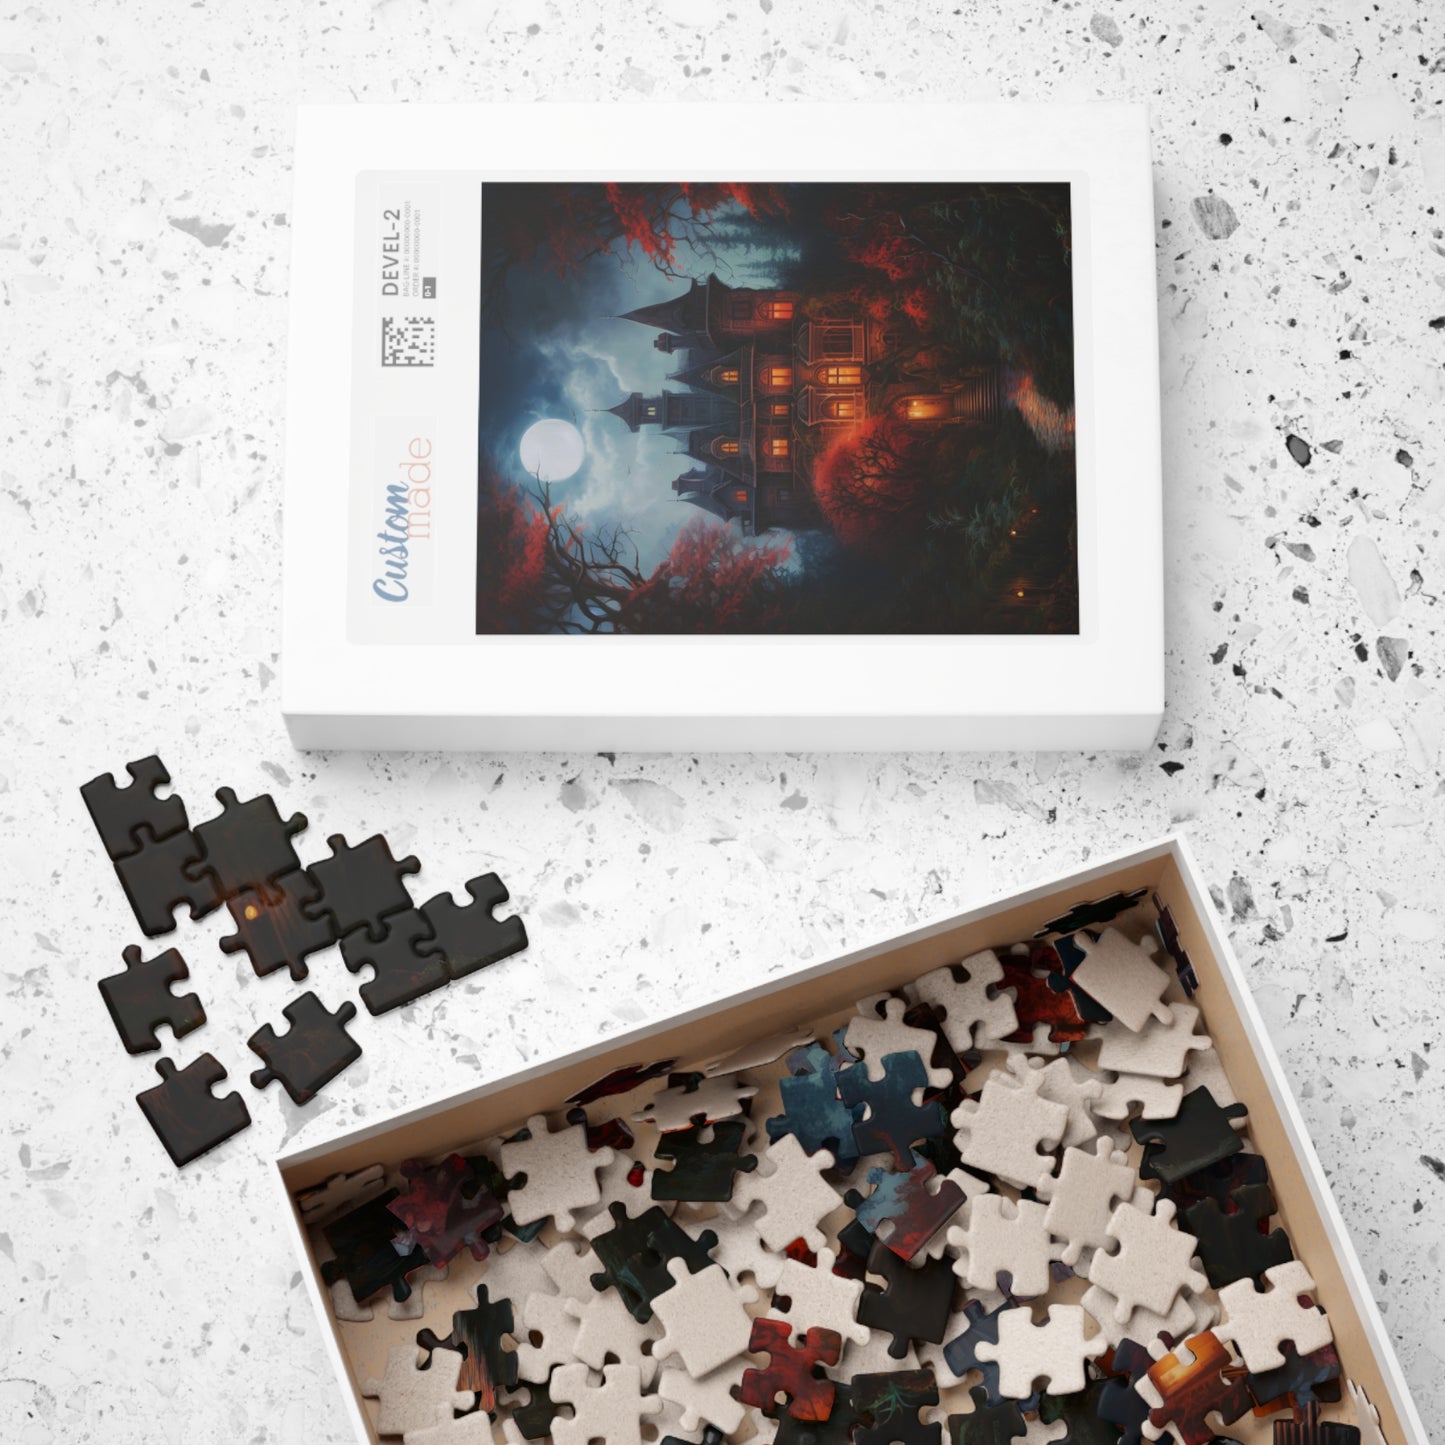 Moonlit Victorian Manor | Jigsaw Puzzle